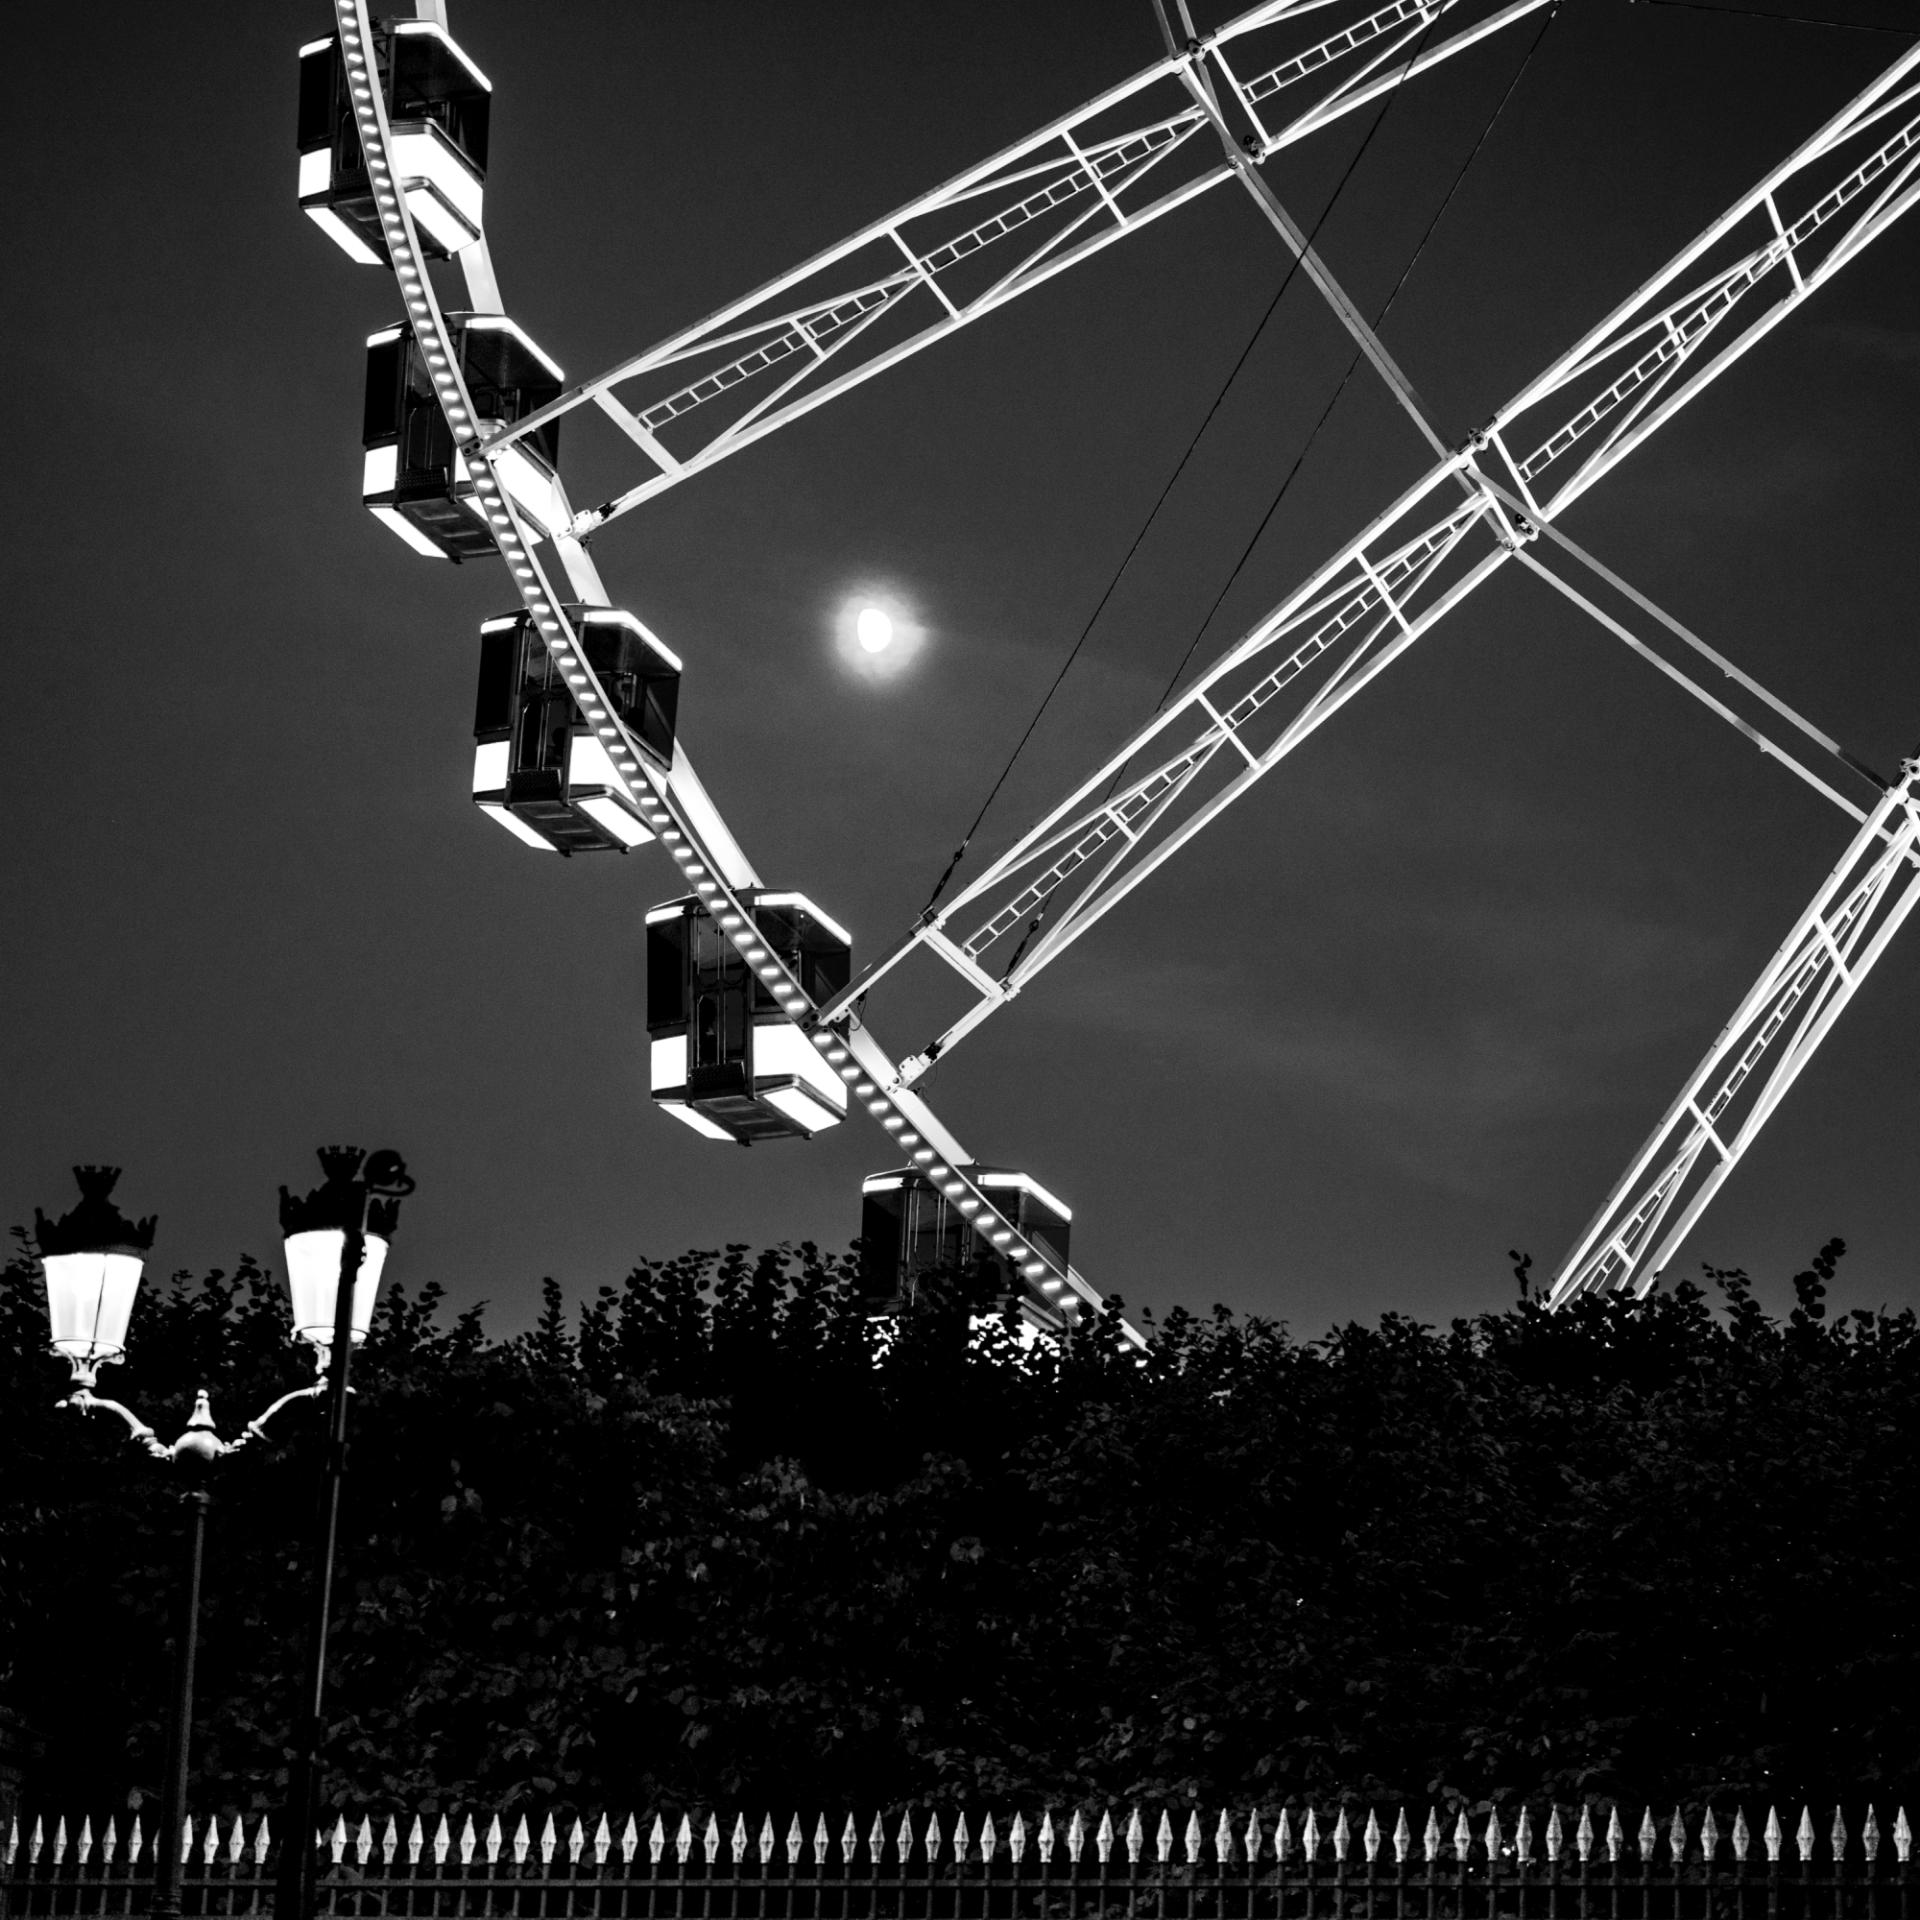 New York Photography Awards Winner - Ferris wheel in the moonlight